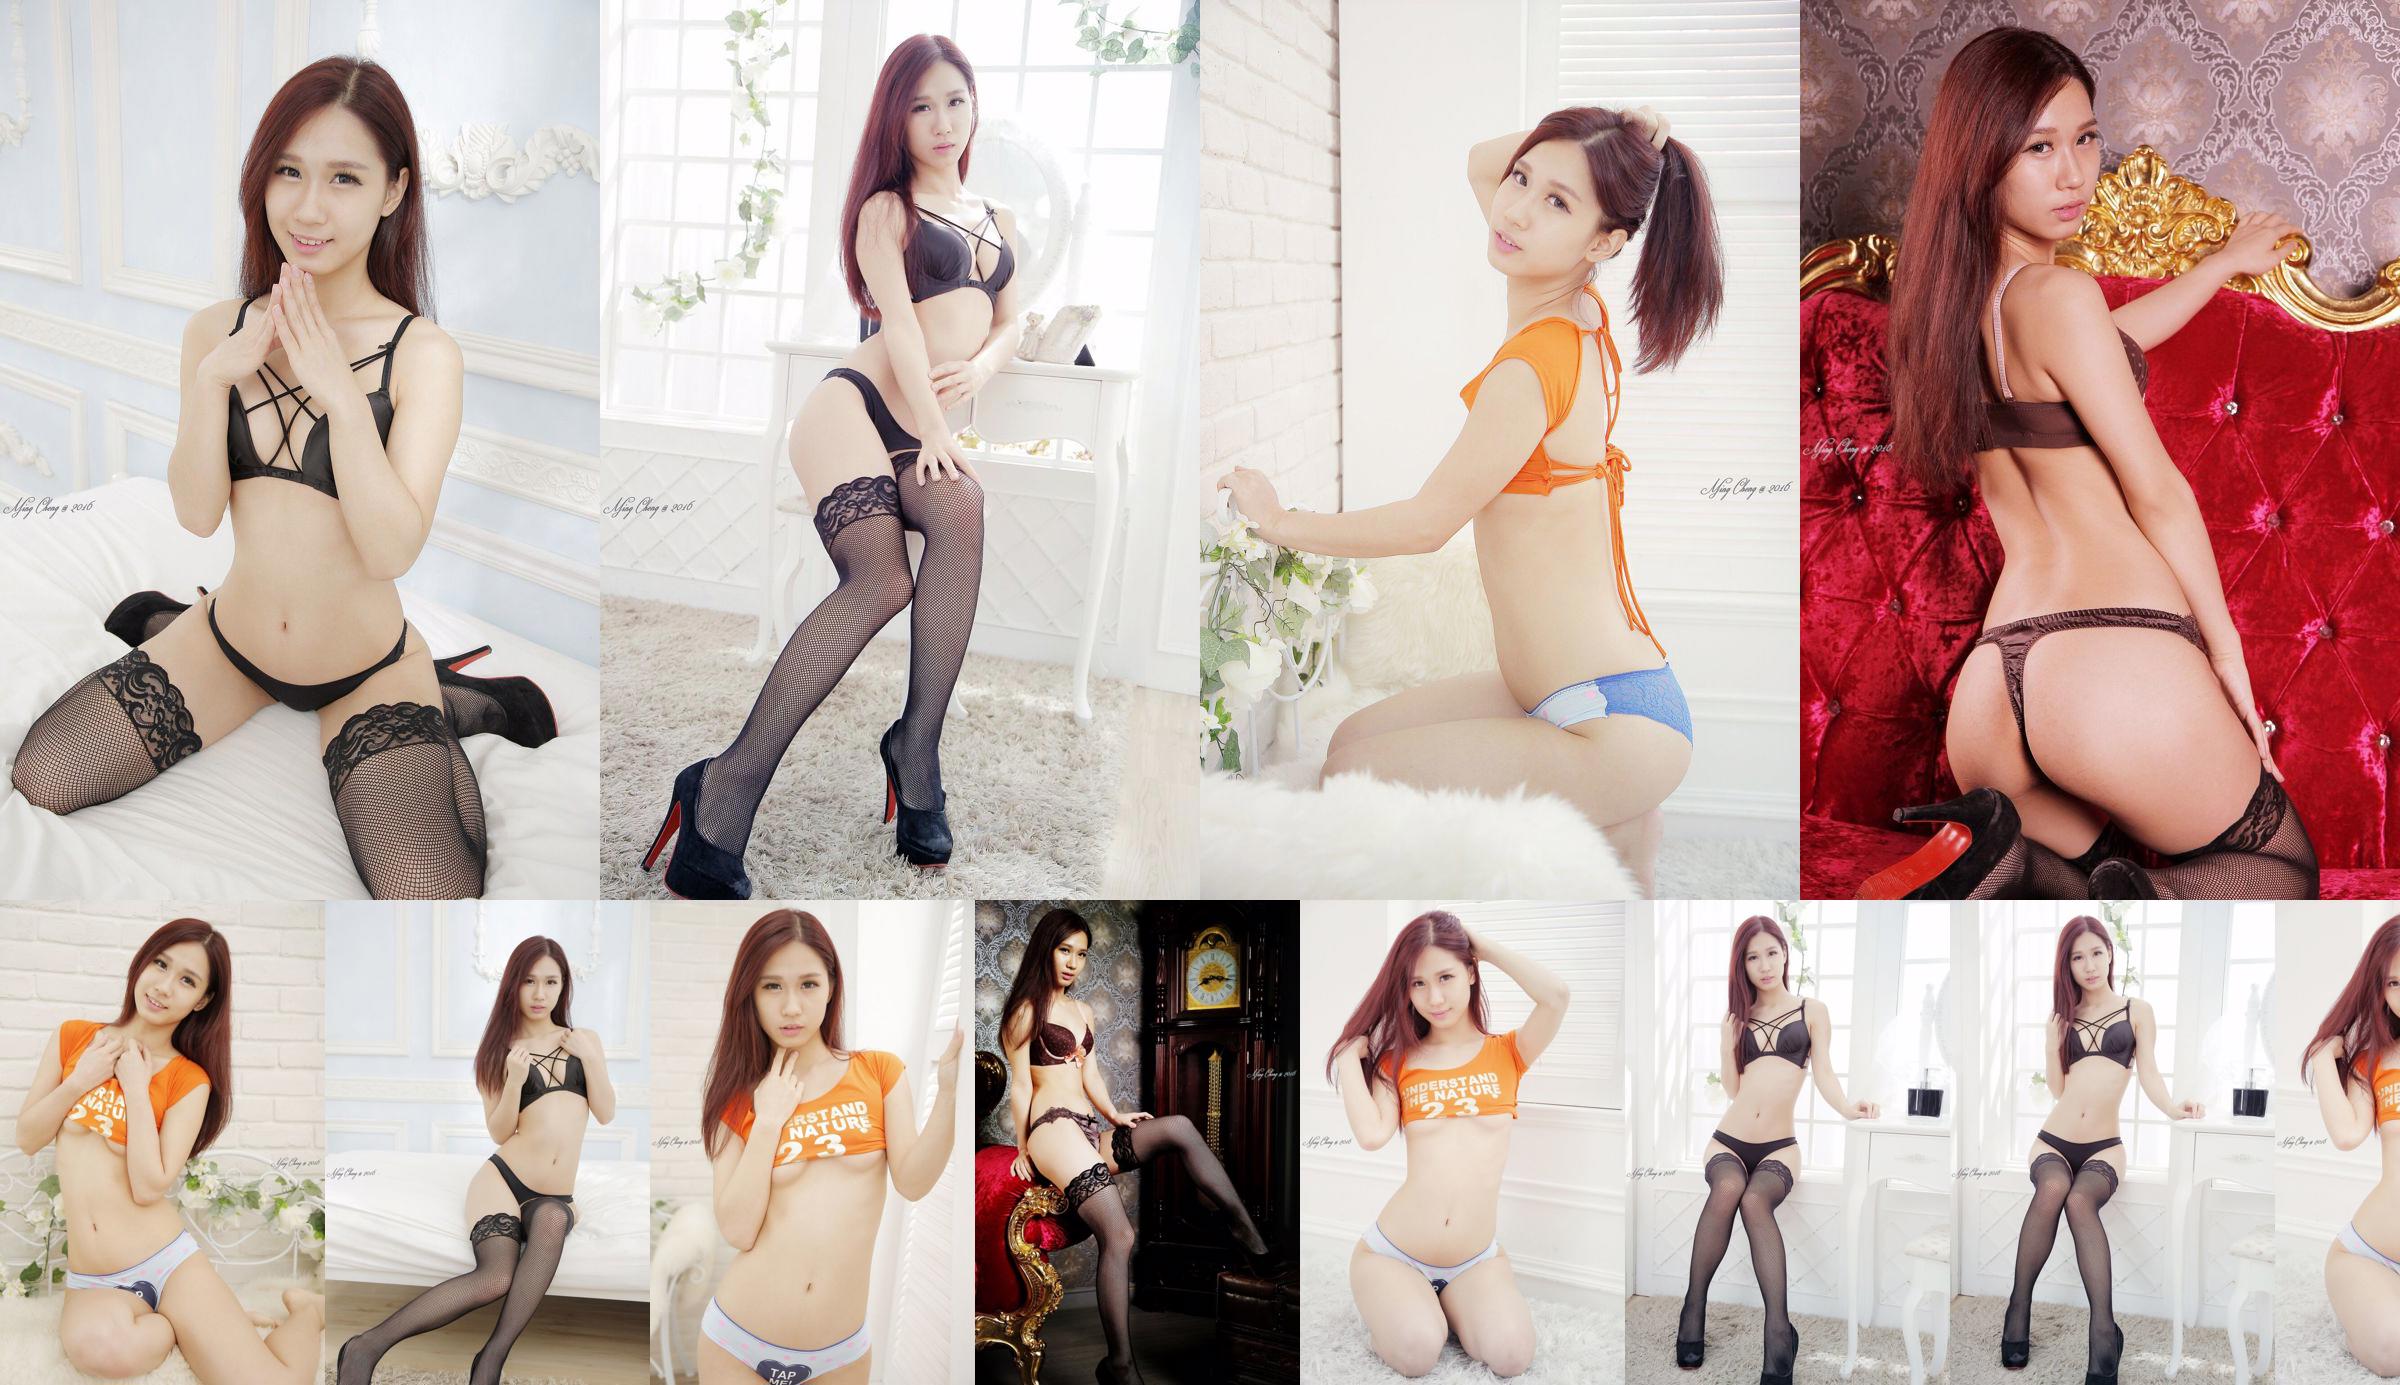 [Taiwan Zhengmei] Belle underwear studio shooting No.ca9122 Page 2